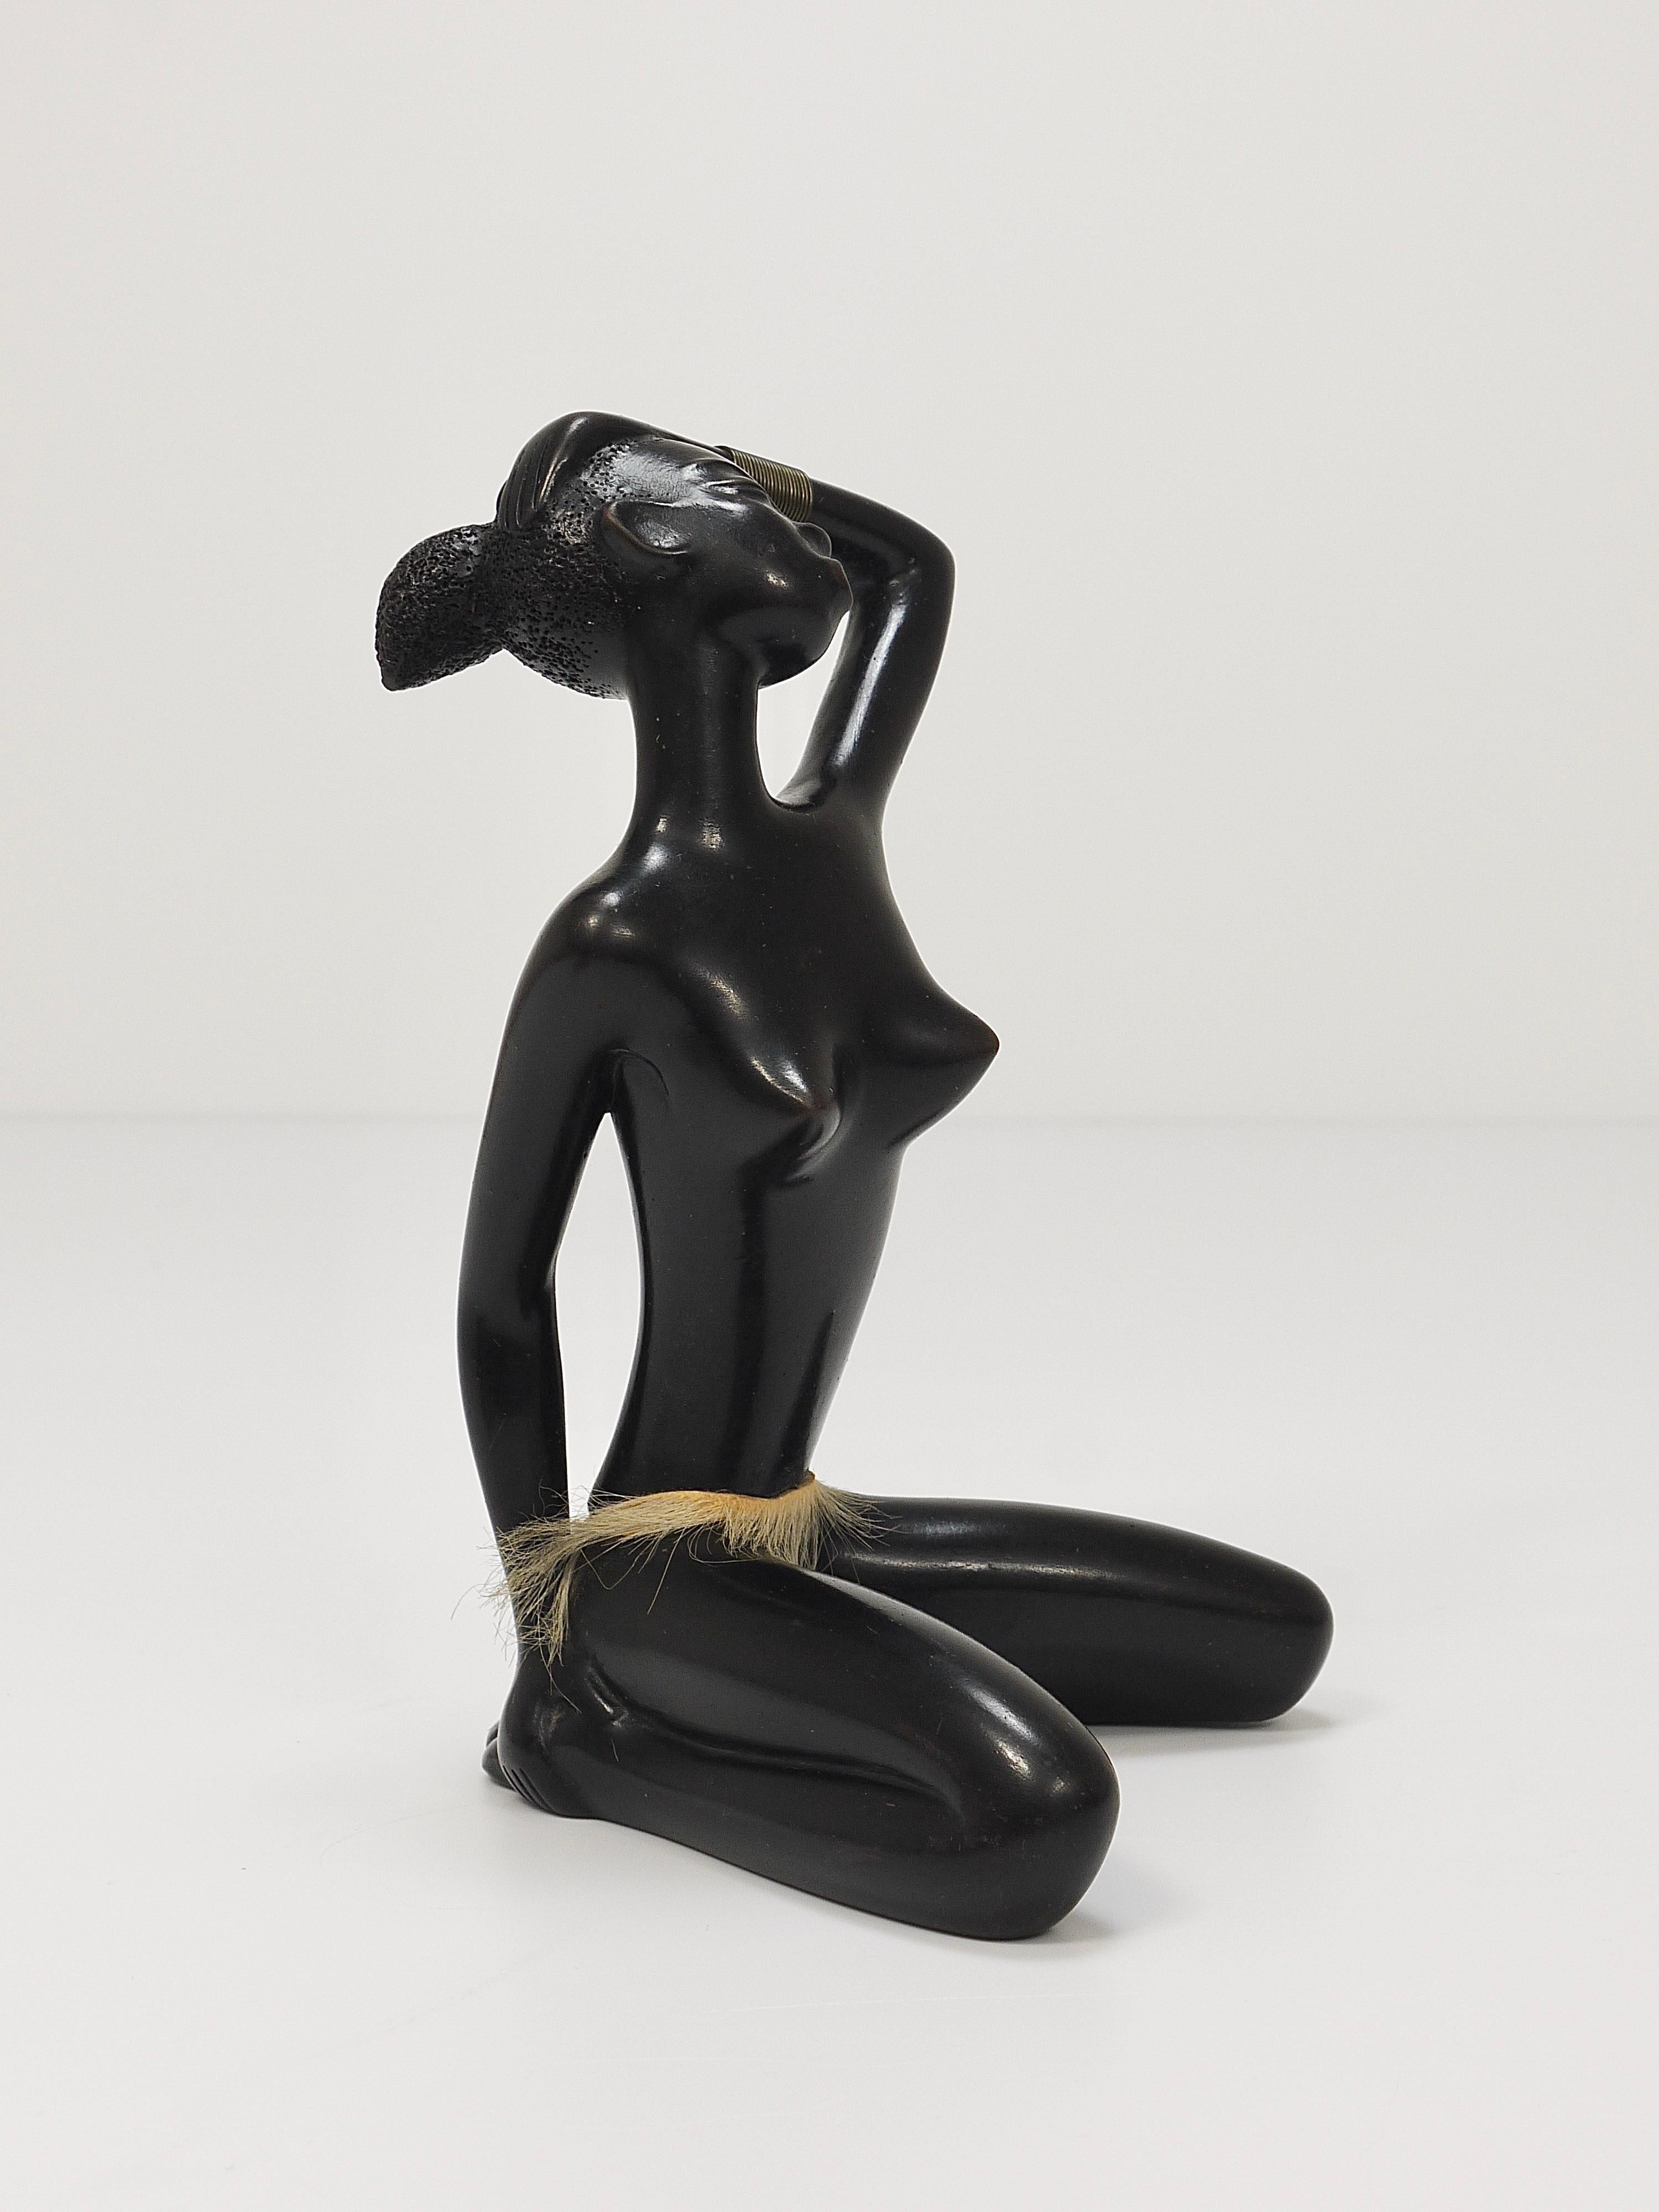 African Woman Figurine Sculpture by Leopold Anzengruber, Vienna, Austria, 1950s For Sale 5